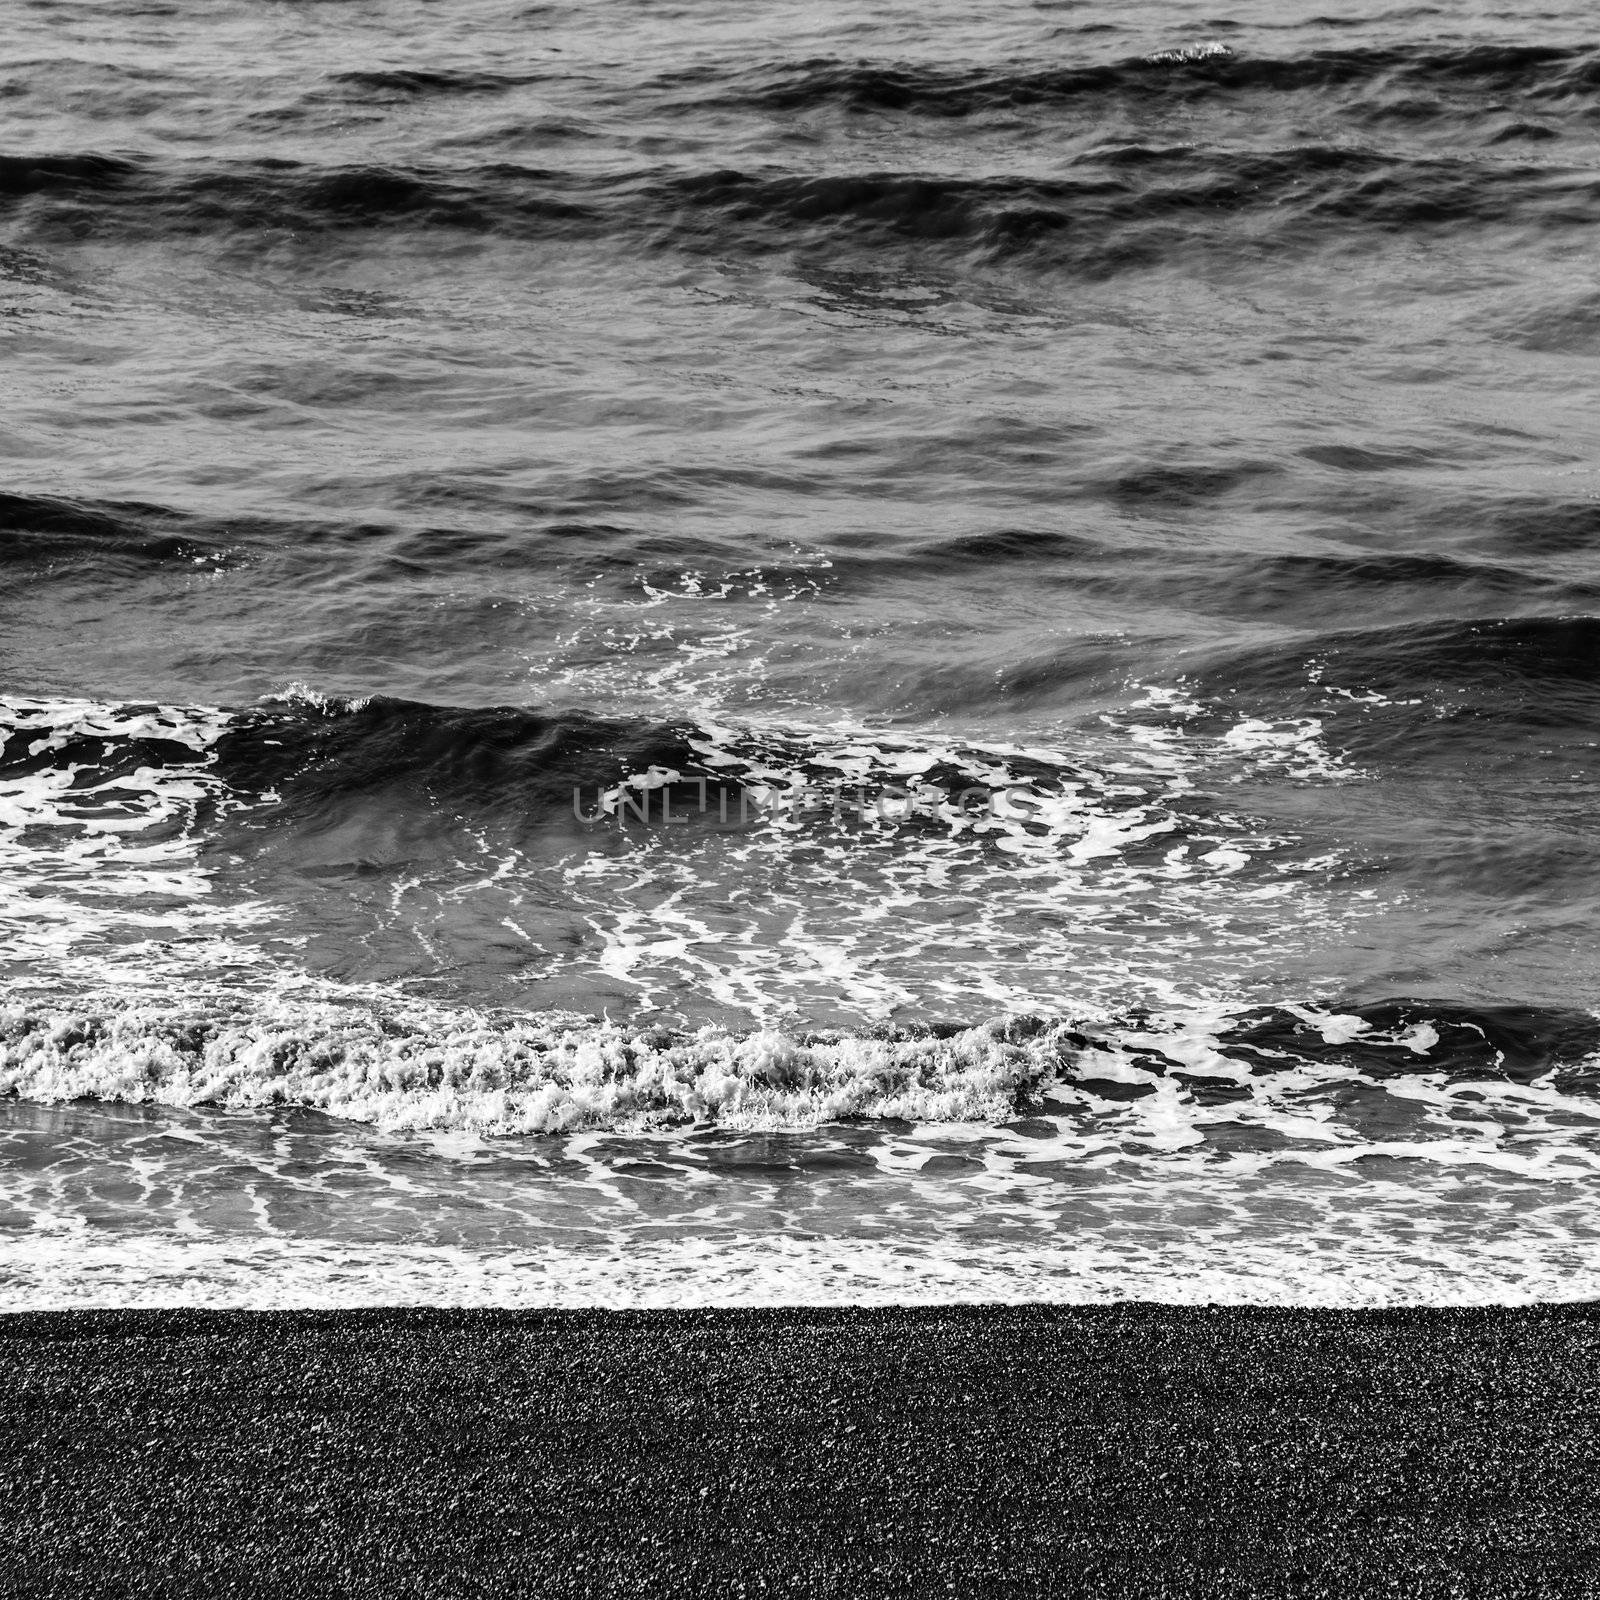 Sea waves and pebble beach by dutourdumonde